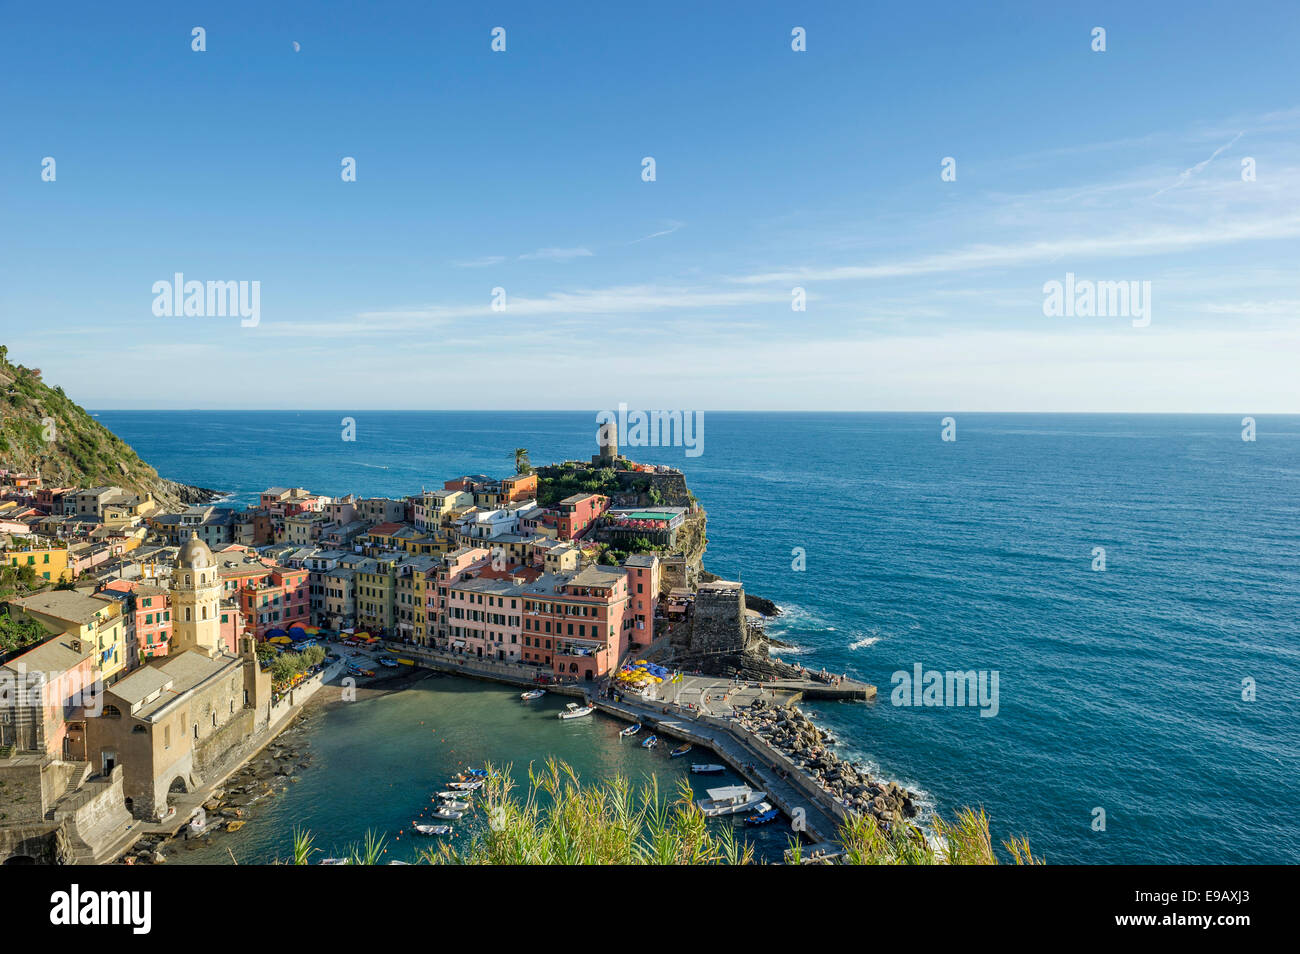 Village with colorful houses by the sea, Vernazza, Cinque Terre, La Spezia Province, Liguria, Italy Stock Photo